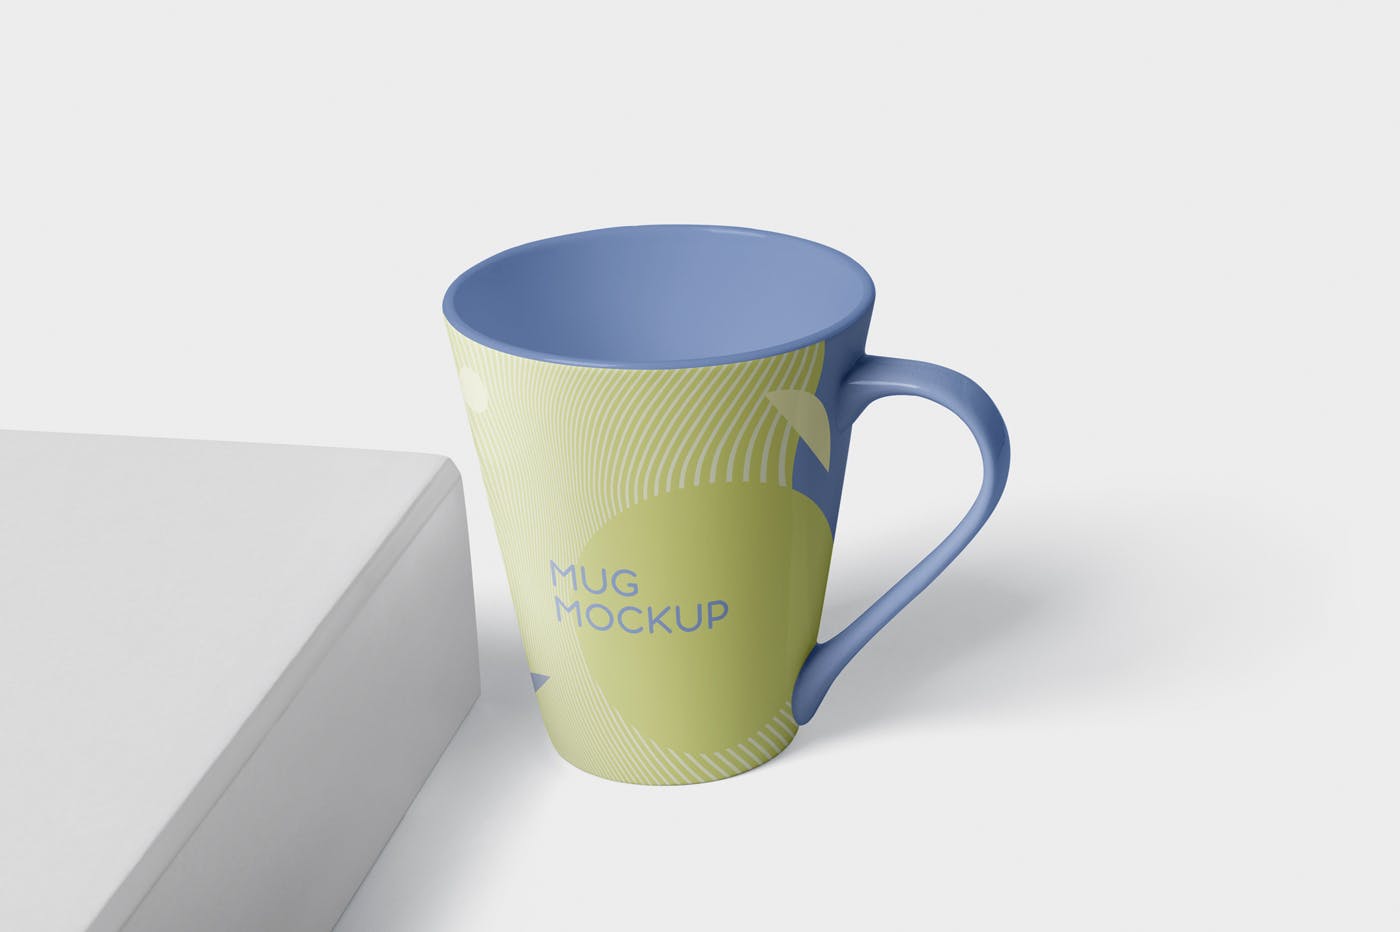 锥形马克杯图案设计16图库精选 Mug Mockup – Cone Shaped插图(3)